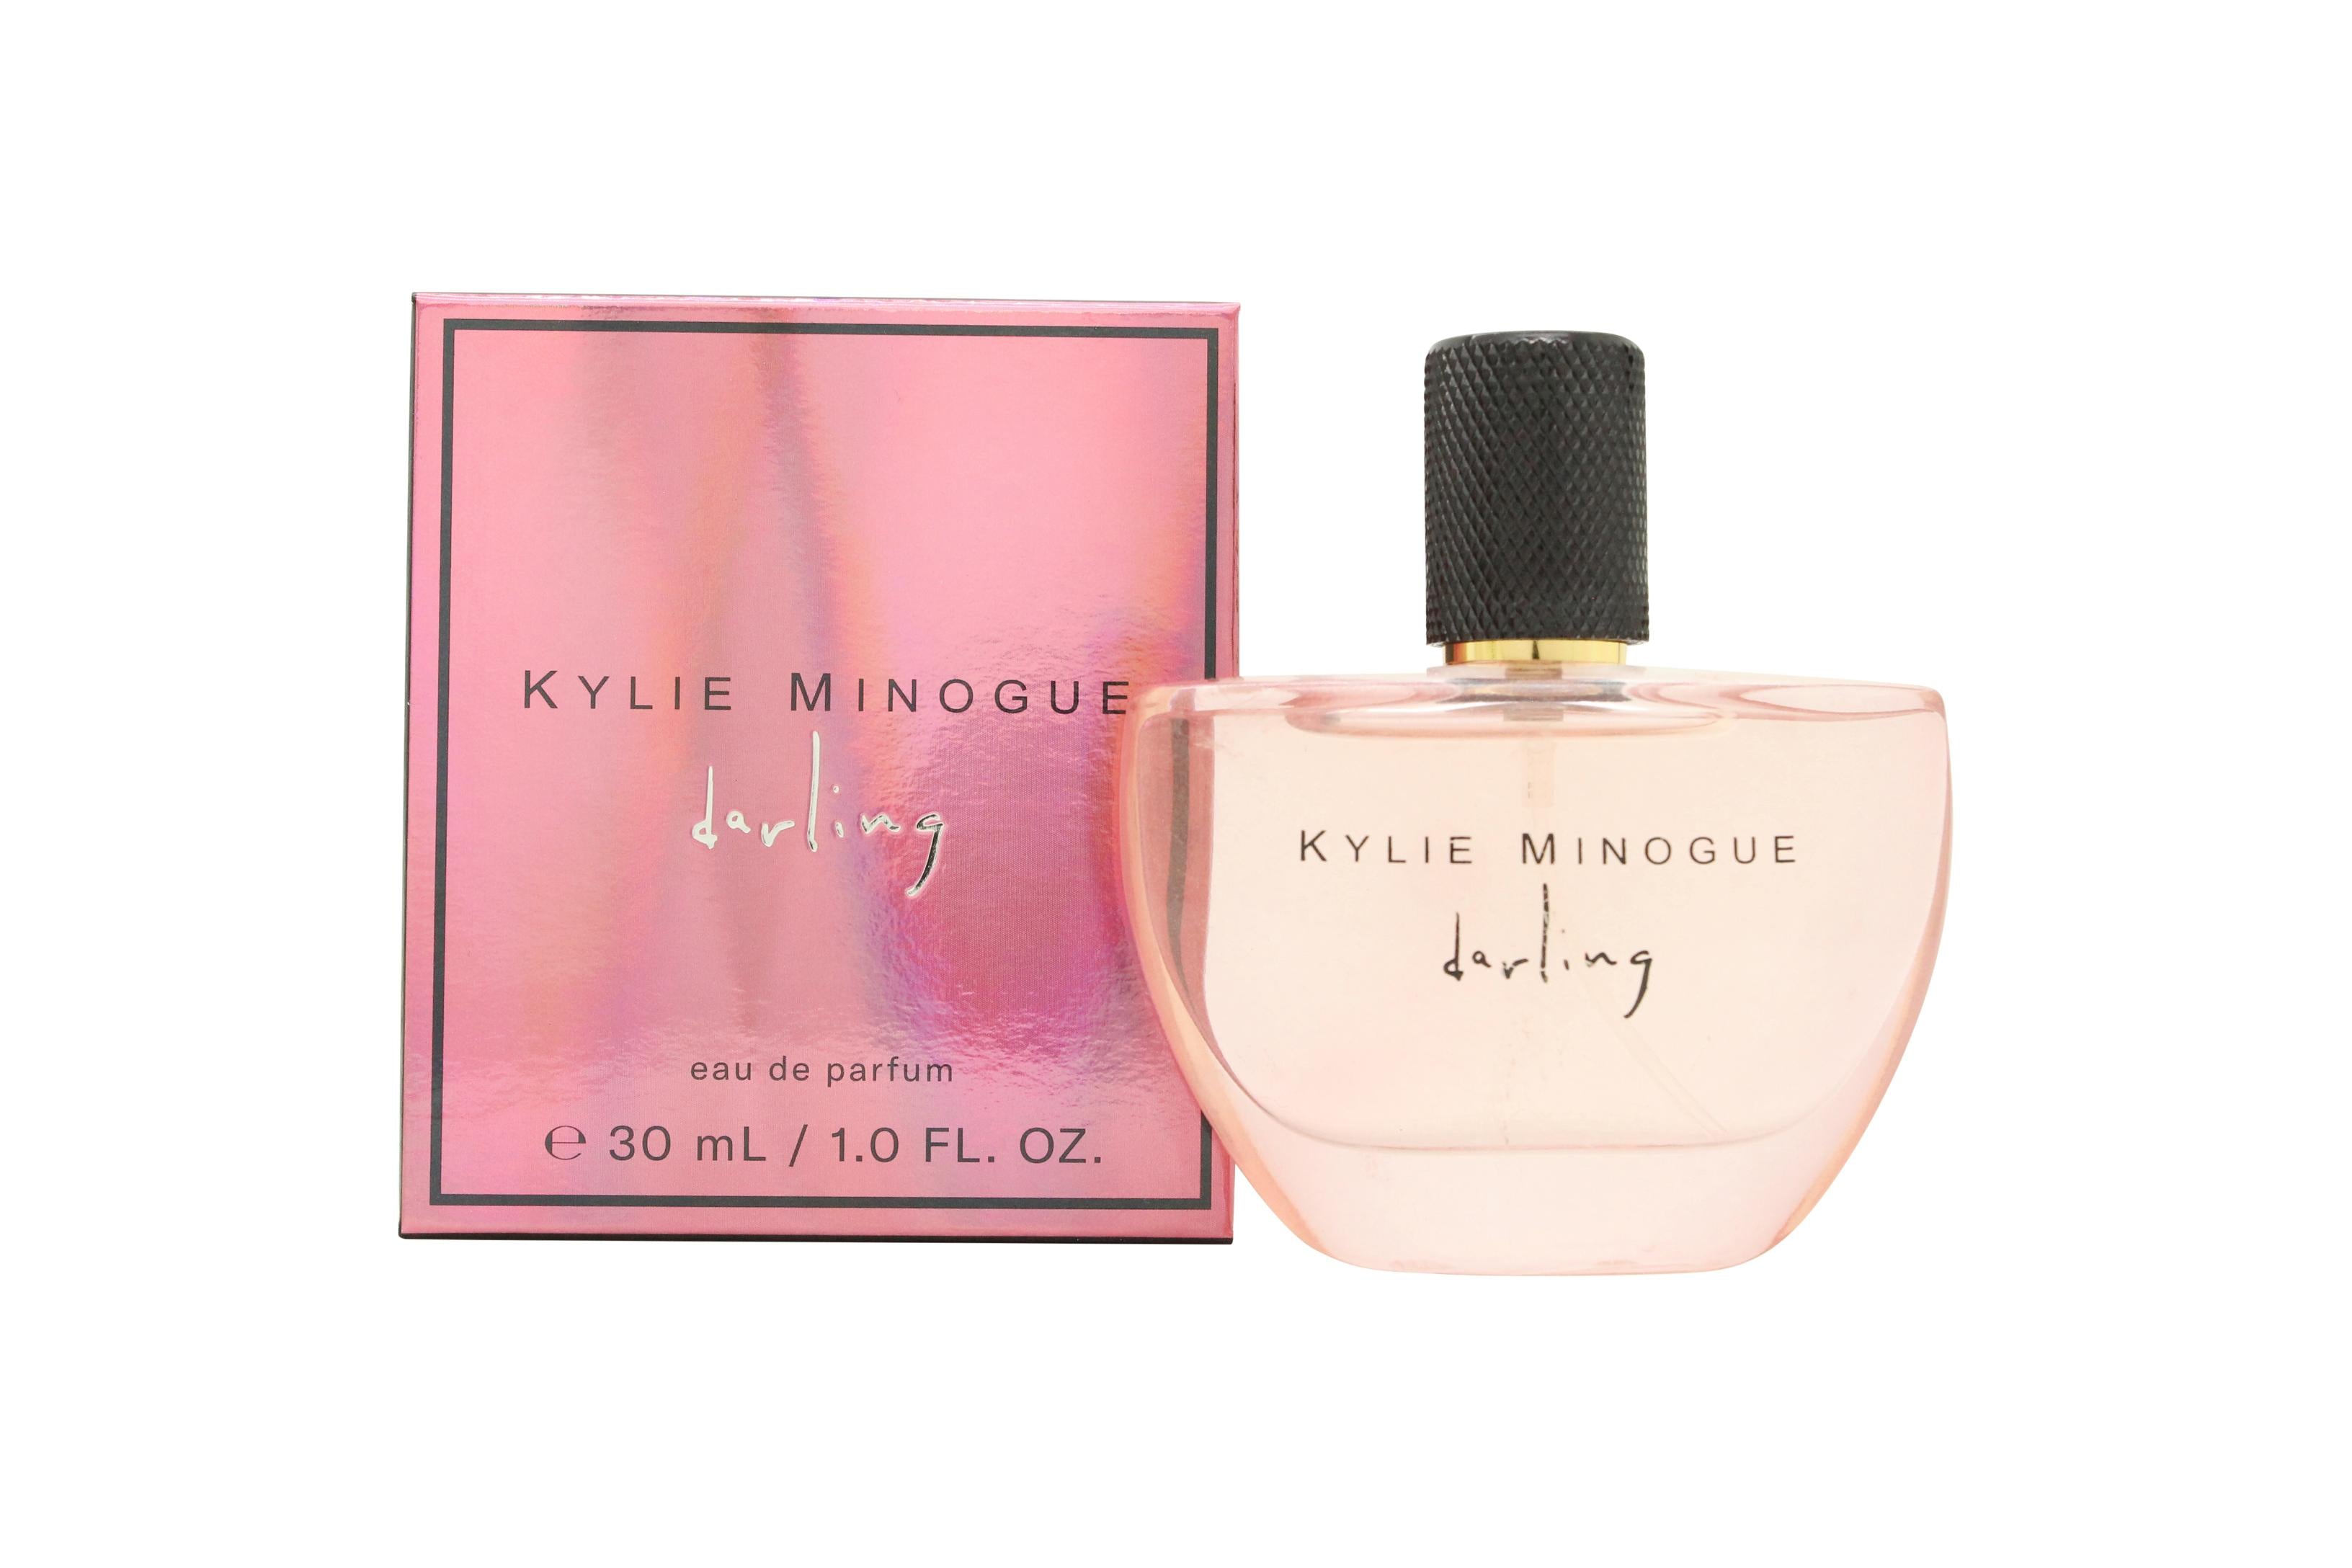 View Kylie Minogue Darling Eau de Parfum 30ml Spray information